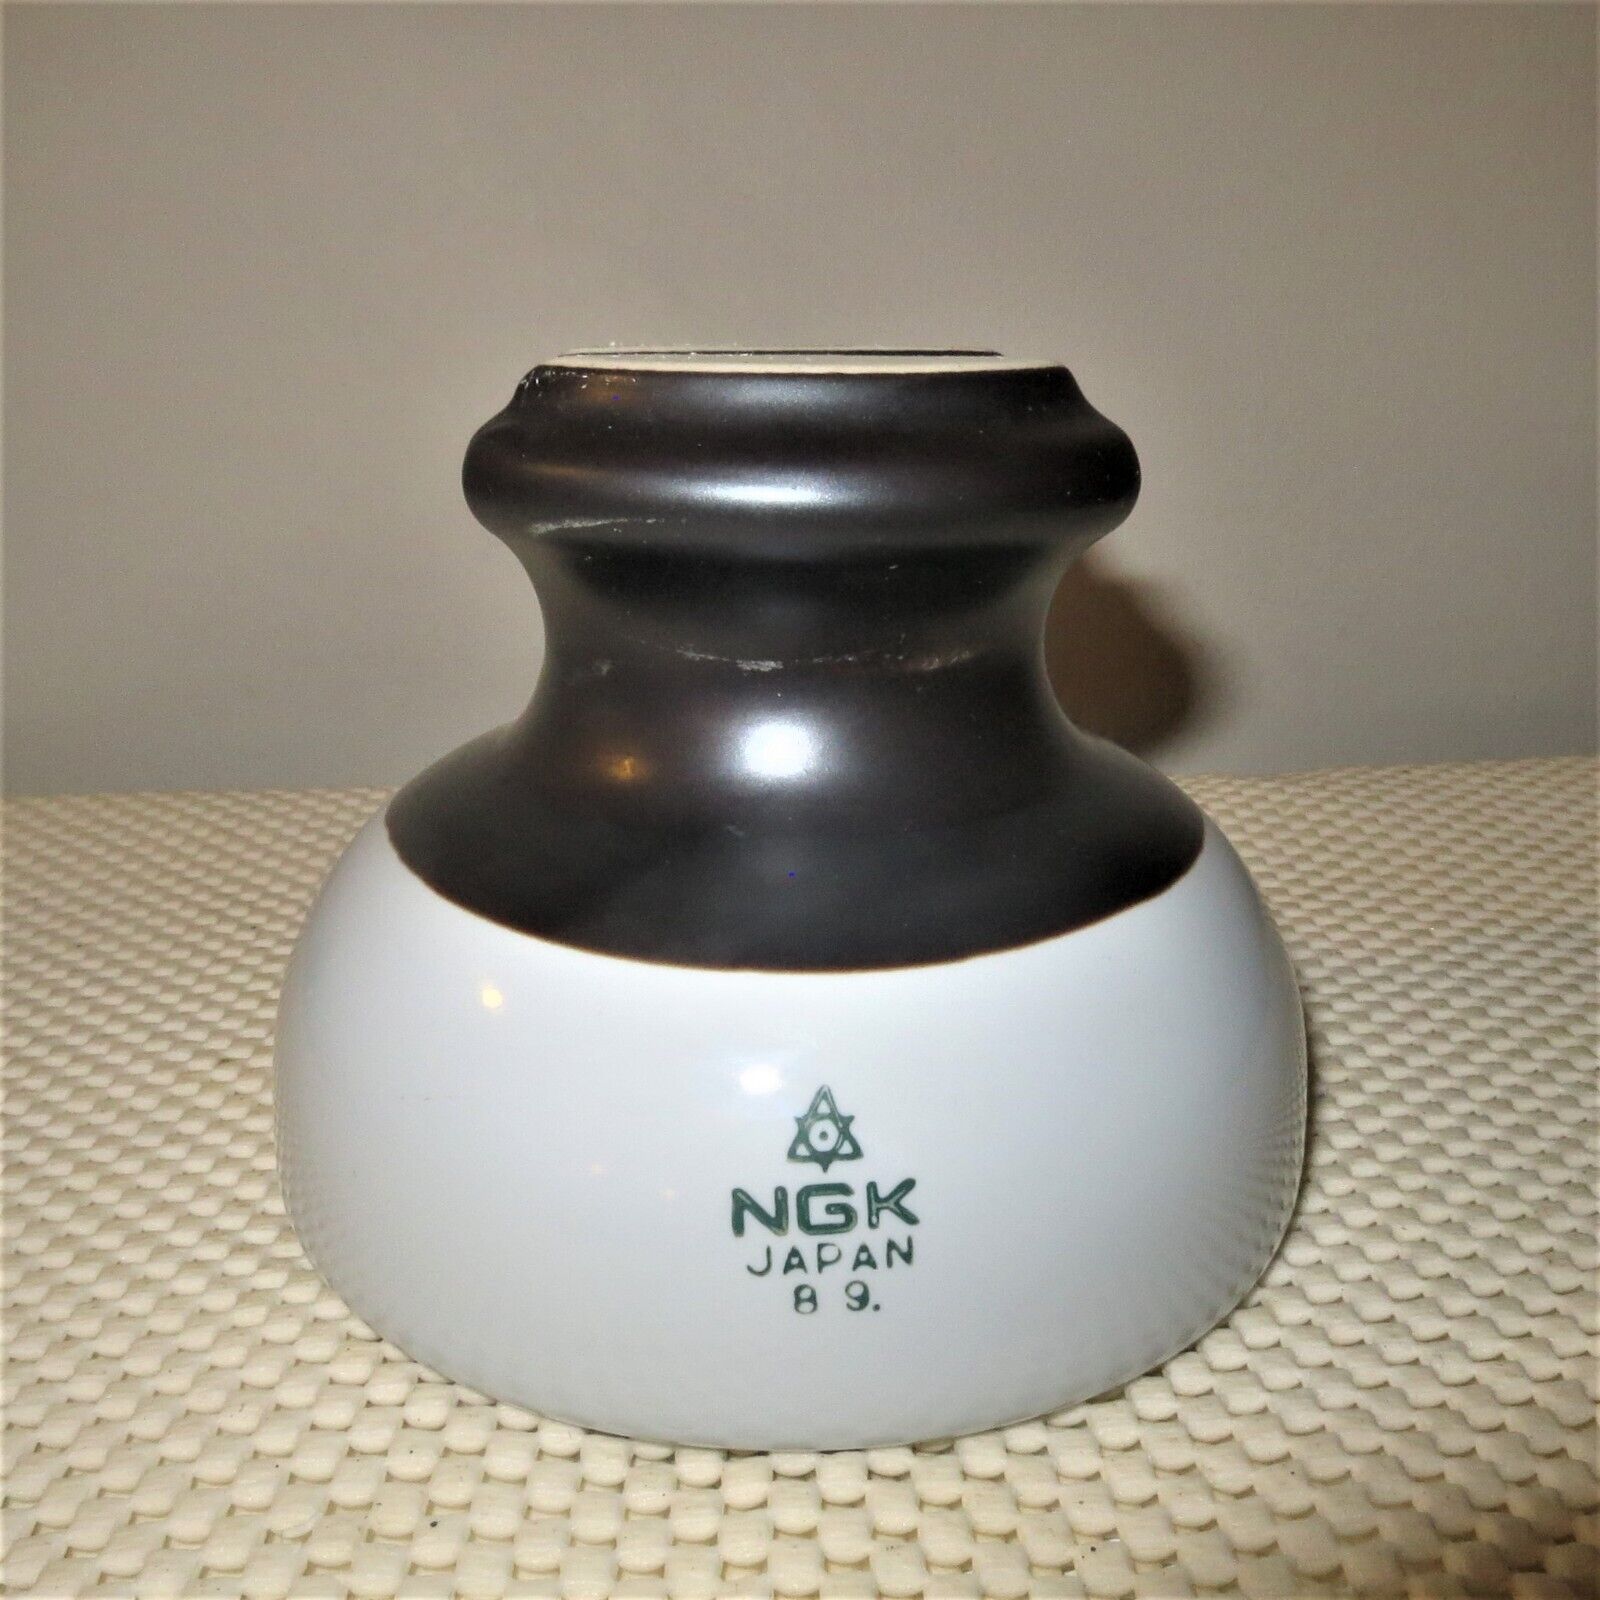 NGK Electric Power Line Insulator Ceramic Porcelain Brown Gray Made in Japan